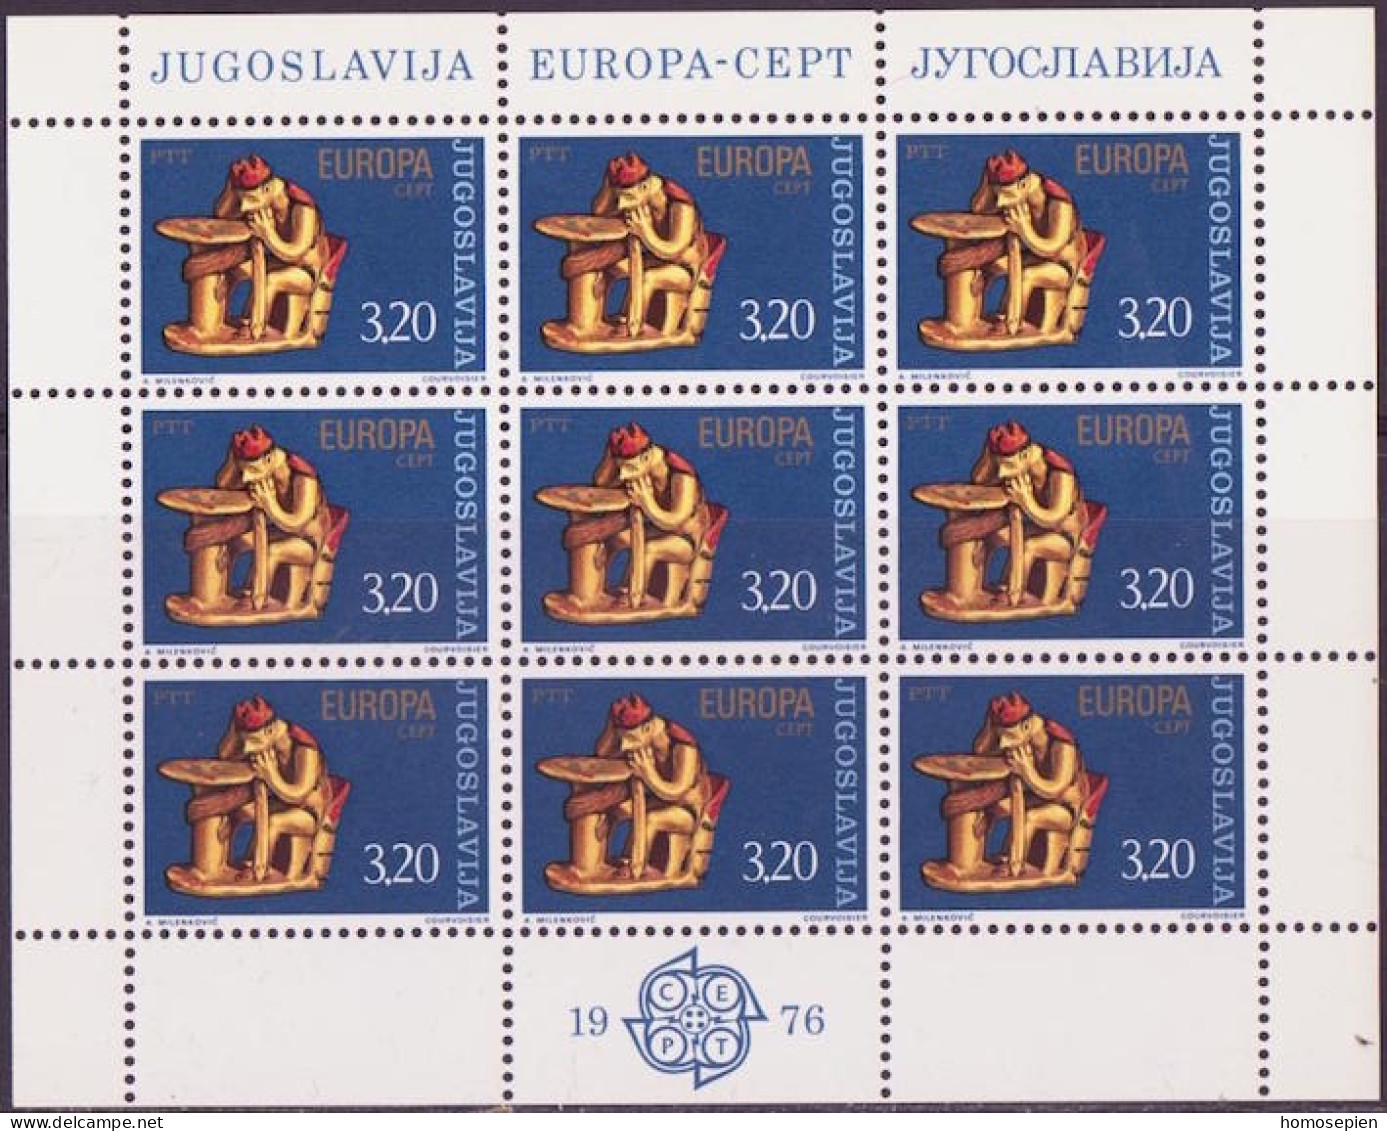 Yougoslavie - Jugoslawien - Yugoslavia Bloc Feuillet 1976 Y&T N°F1524 à F1525 - Michel N°KB1635 à KB1636 *** - EUROPA - Blocks & Sheetlets